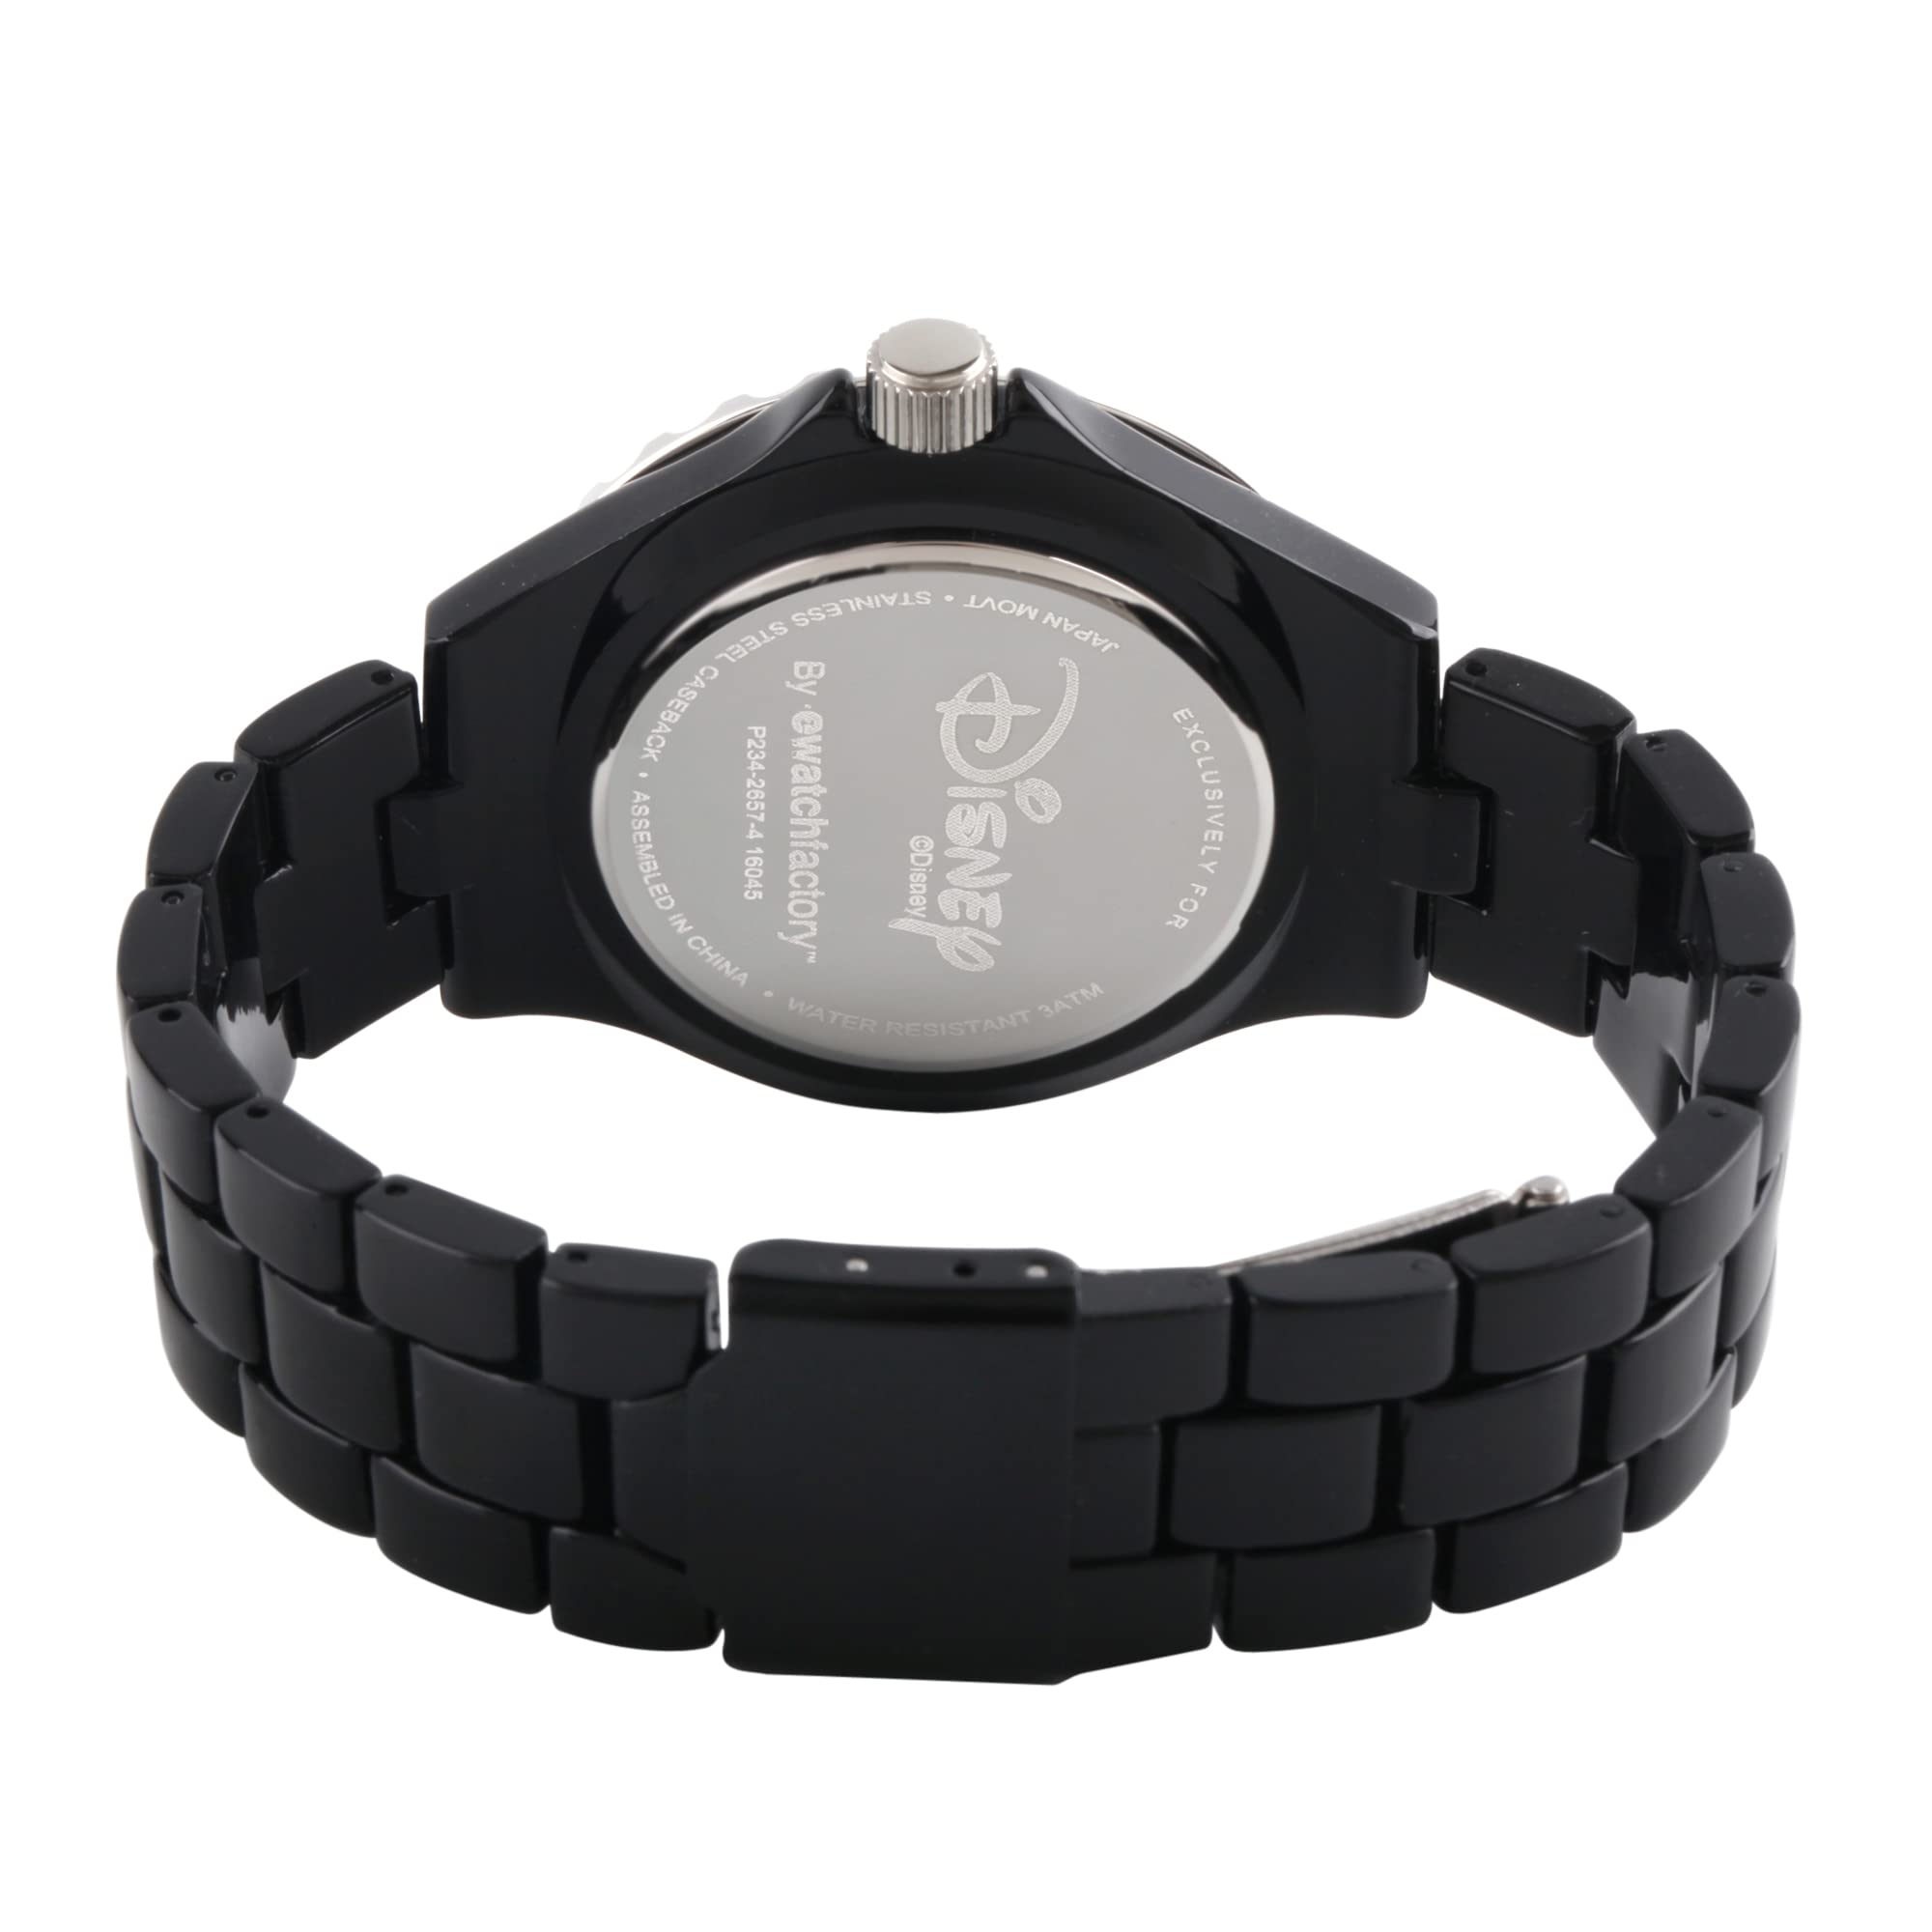 Disney Adult Enamel Sparkle Analog Quartz Bracelet Watch